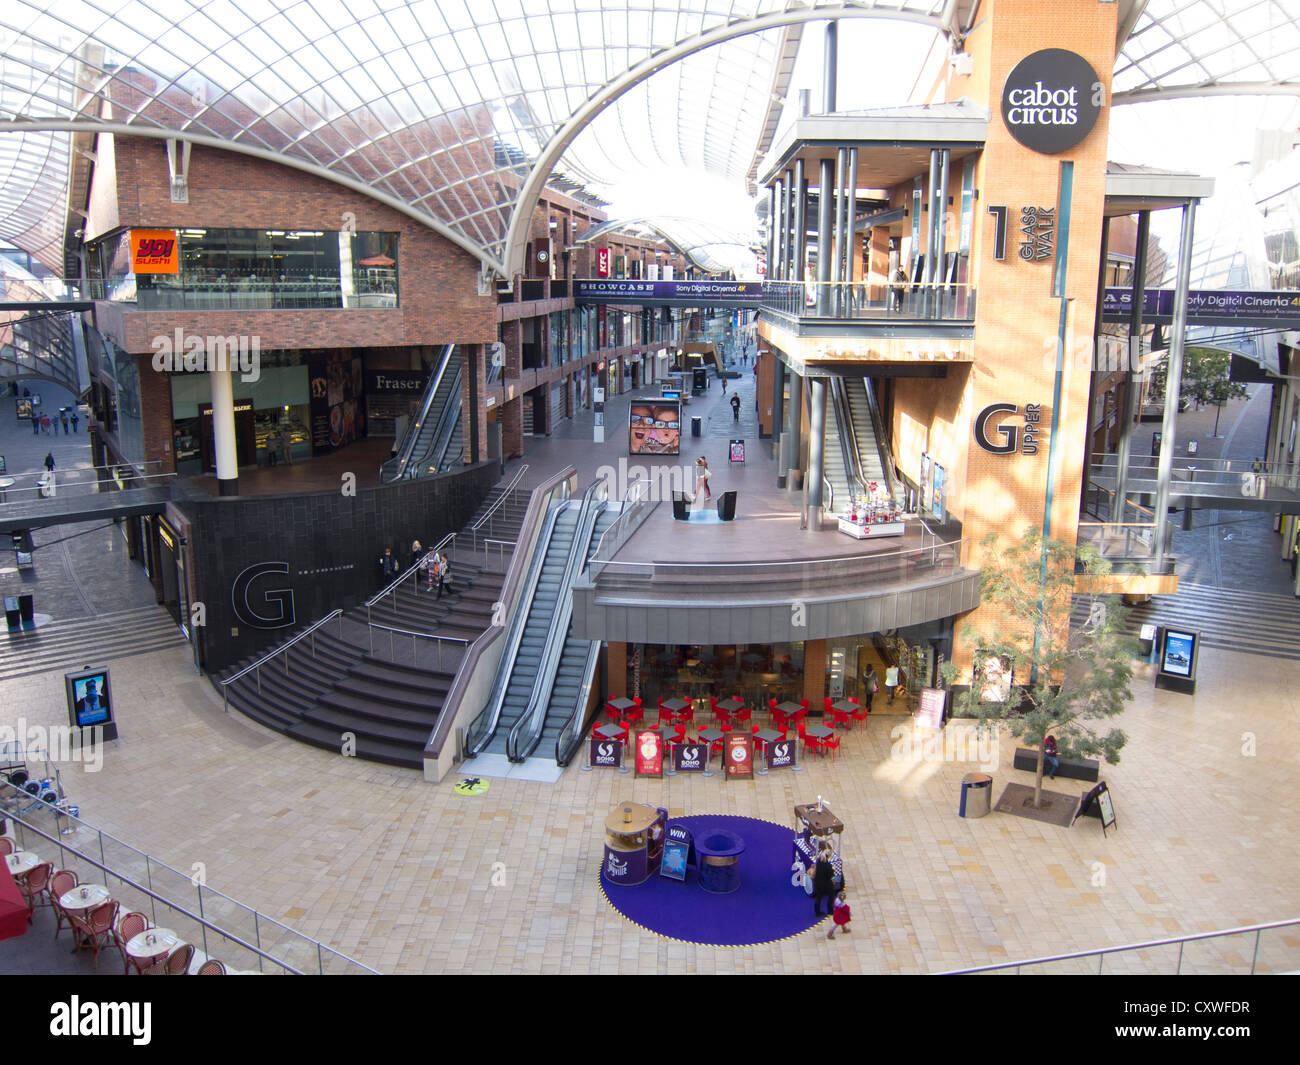 Cabot Circus Shopping Centre, Bristol, UK Stockfoto